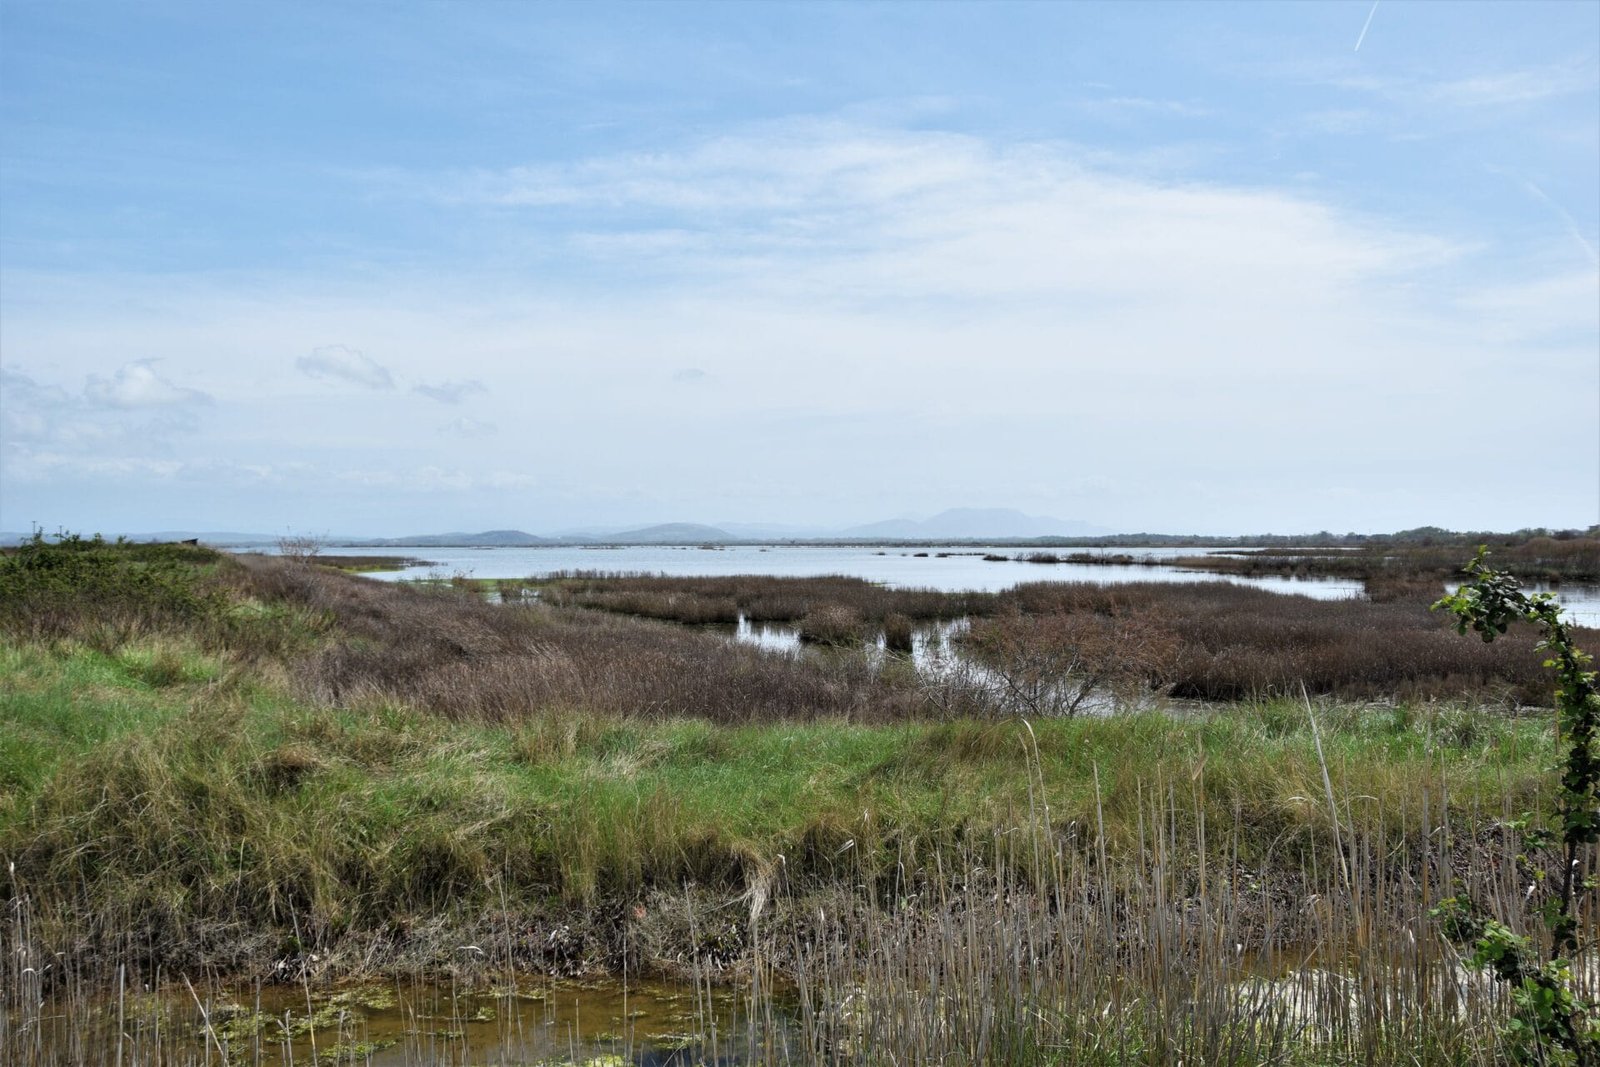 reeds and grassy dams at the shores of a lake